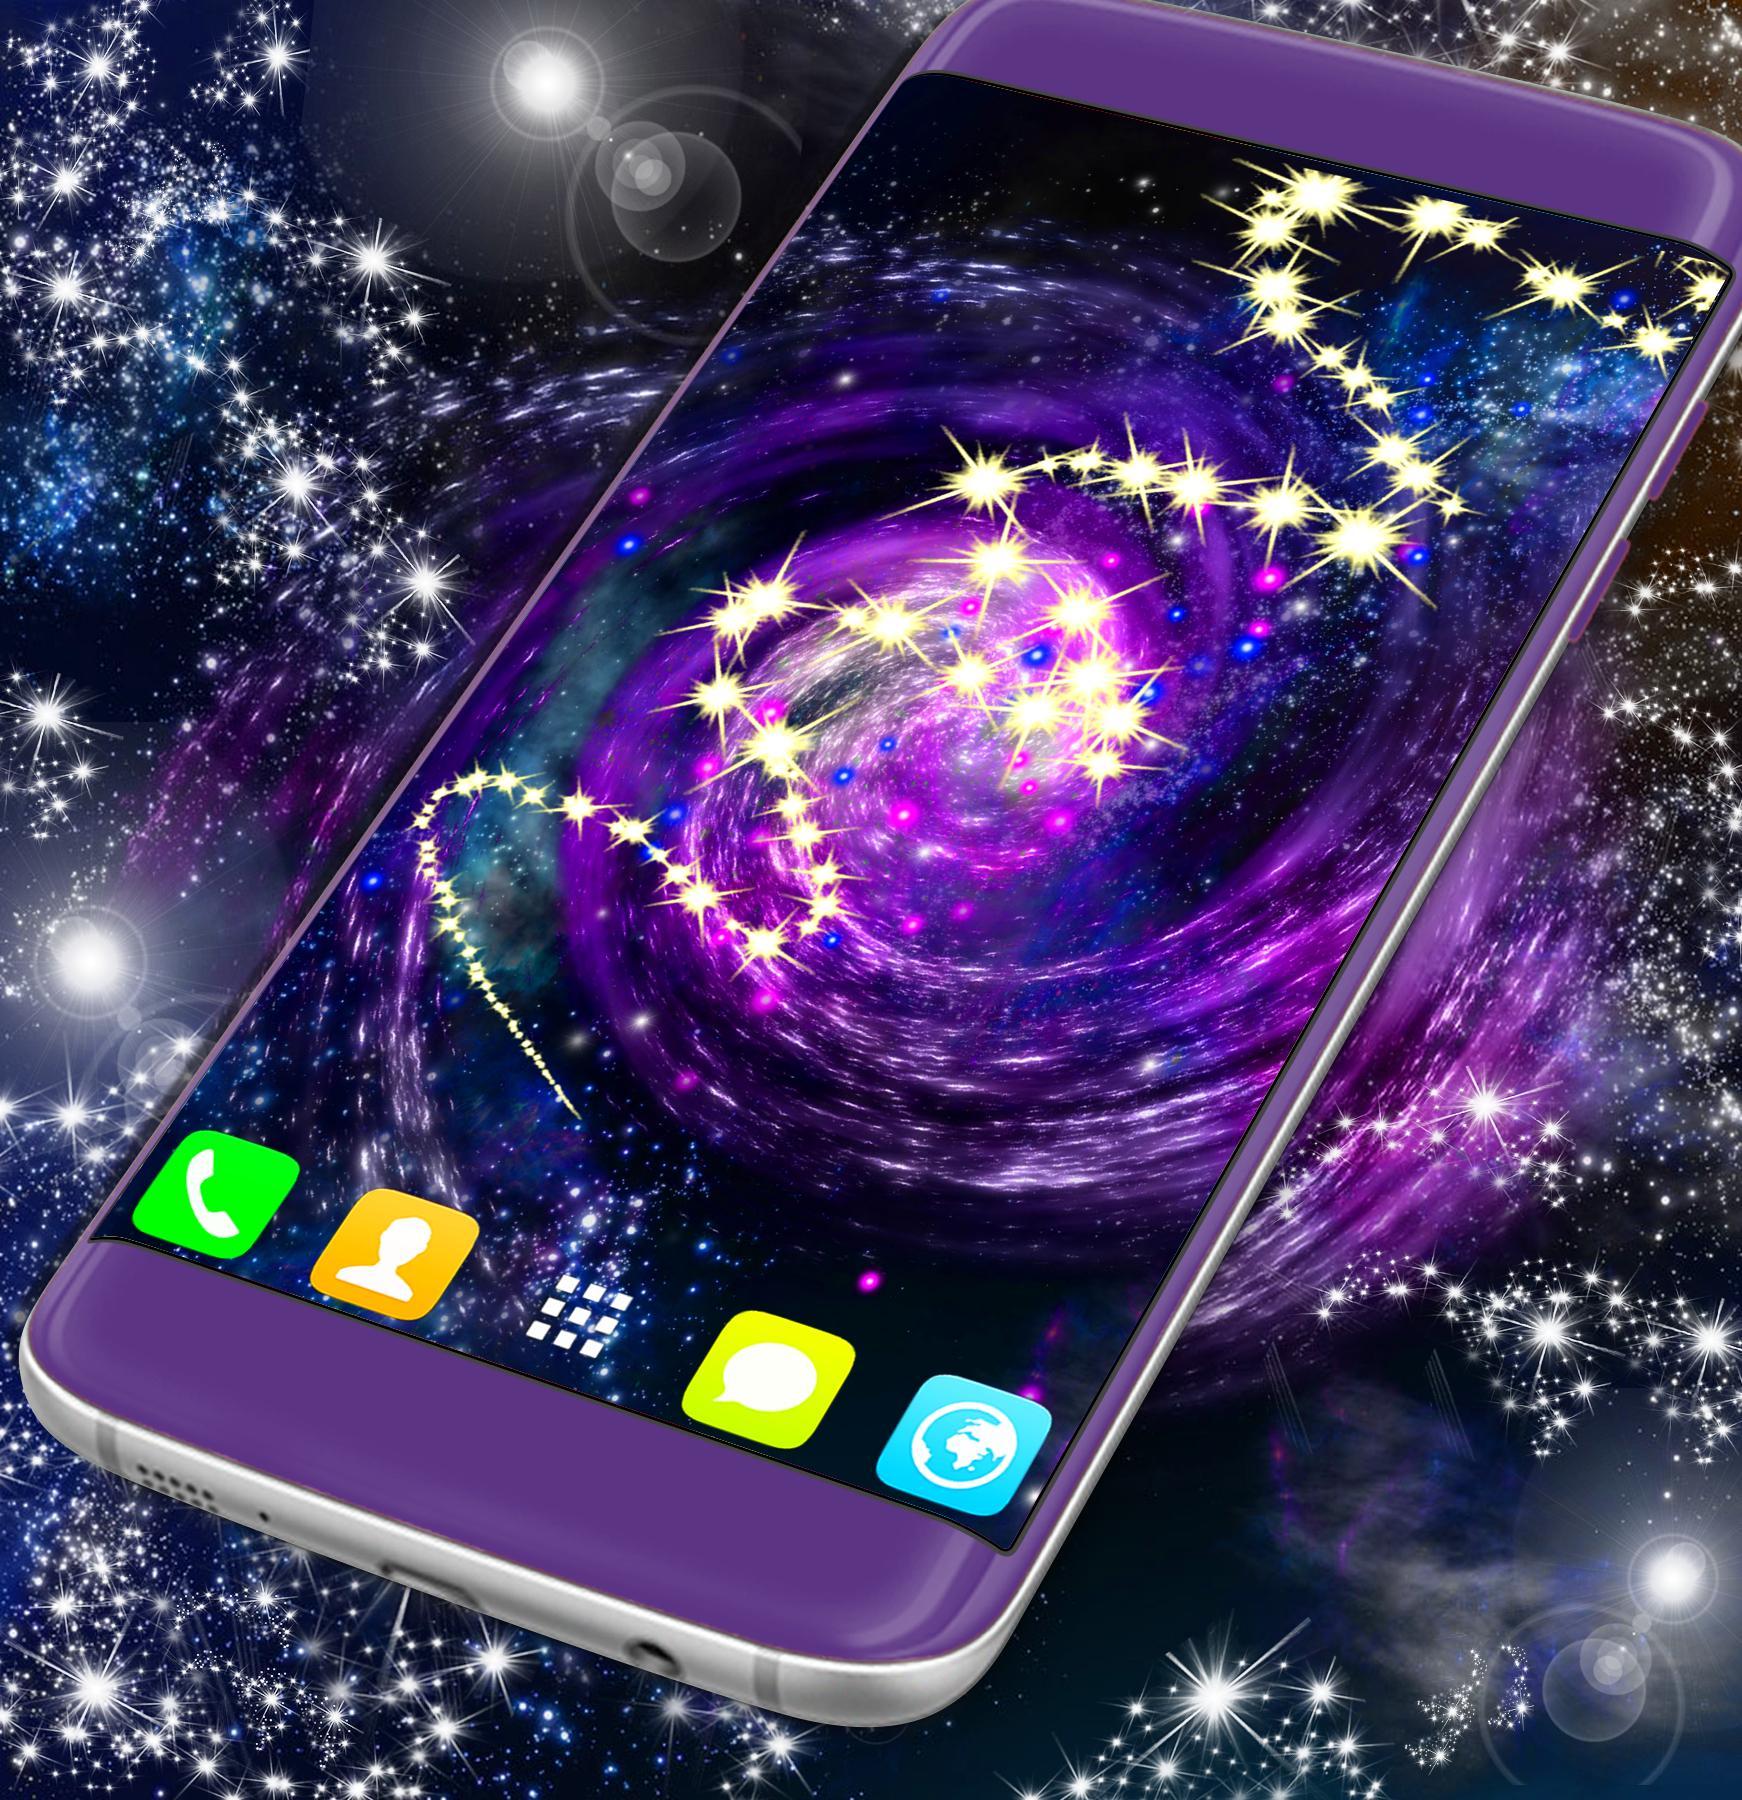 Галакси. Телефон Galaxy. Живая Галактика. Красивые заставки для телефона с галактикой. Try galaxy на андроид